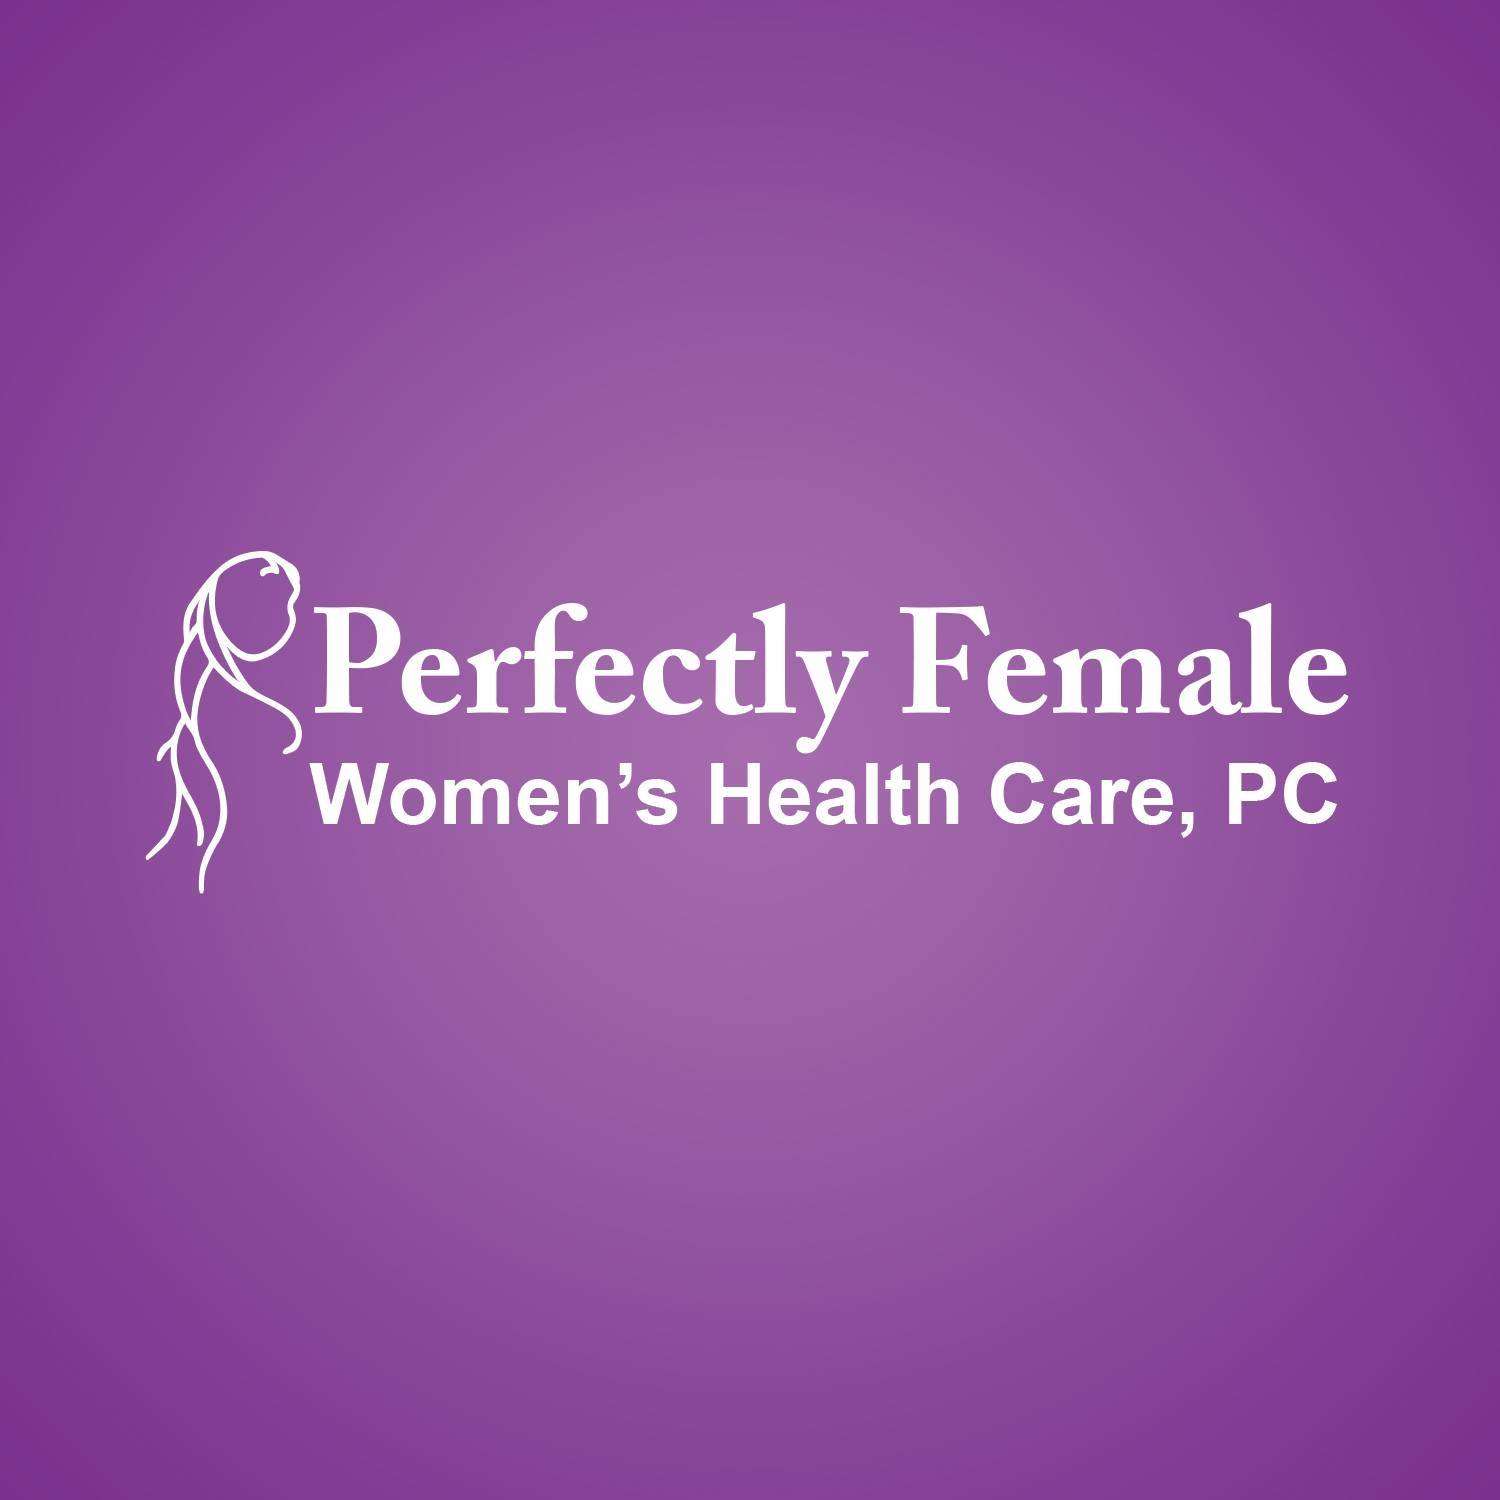 Women's Health Care, PC